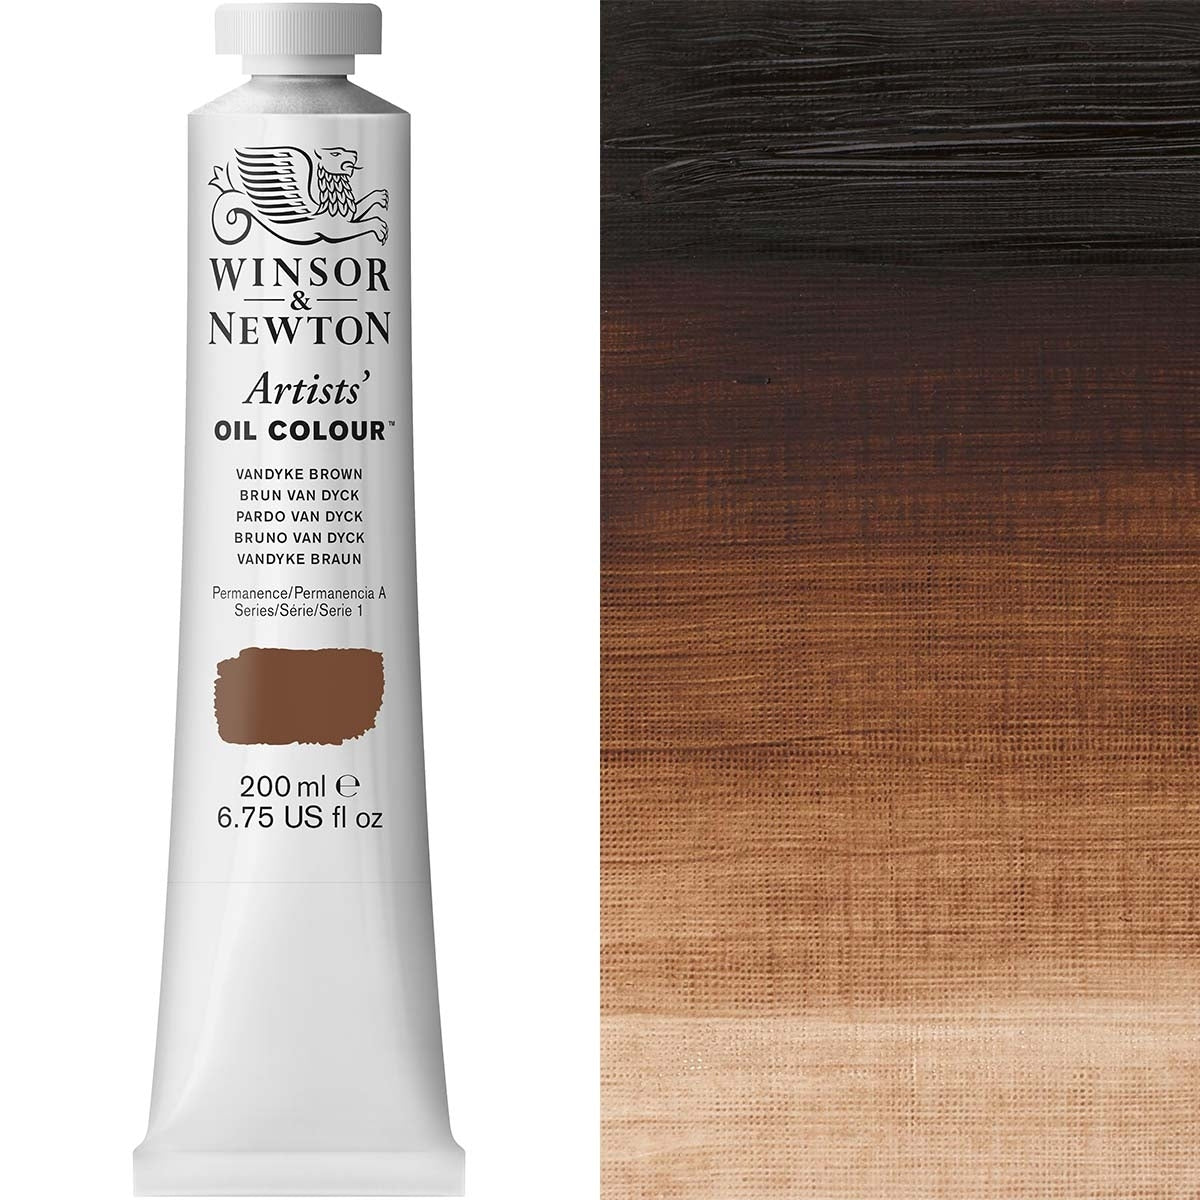 Winsor and Newton - Artists' Oil Colour - 200ml - Vandyke Brown